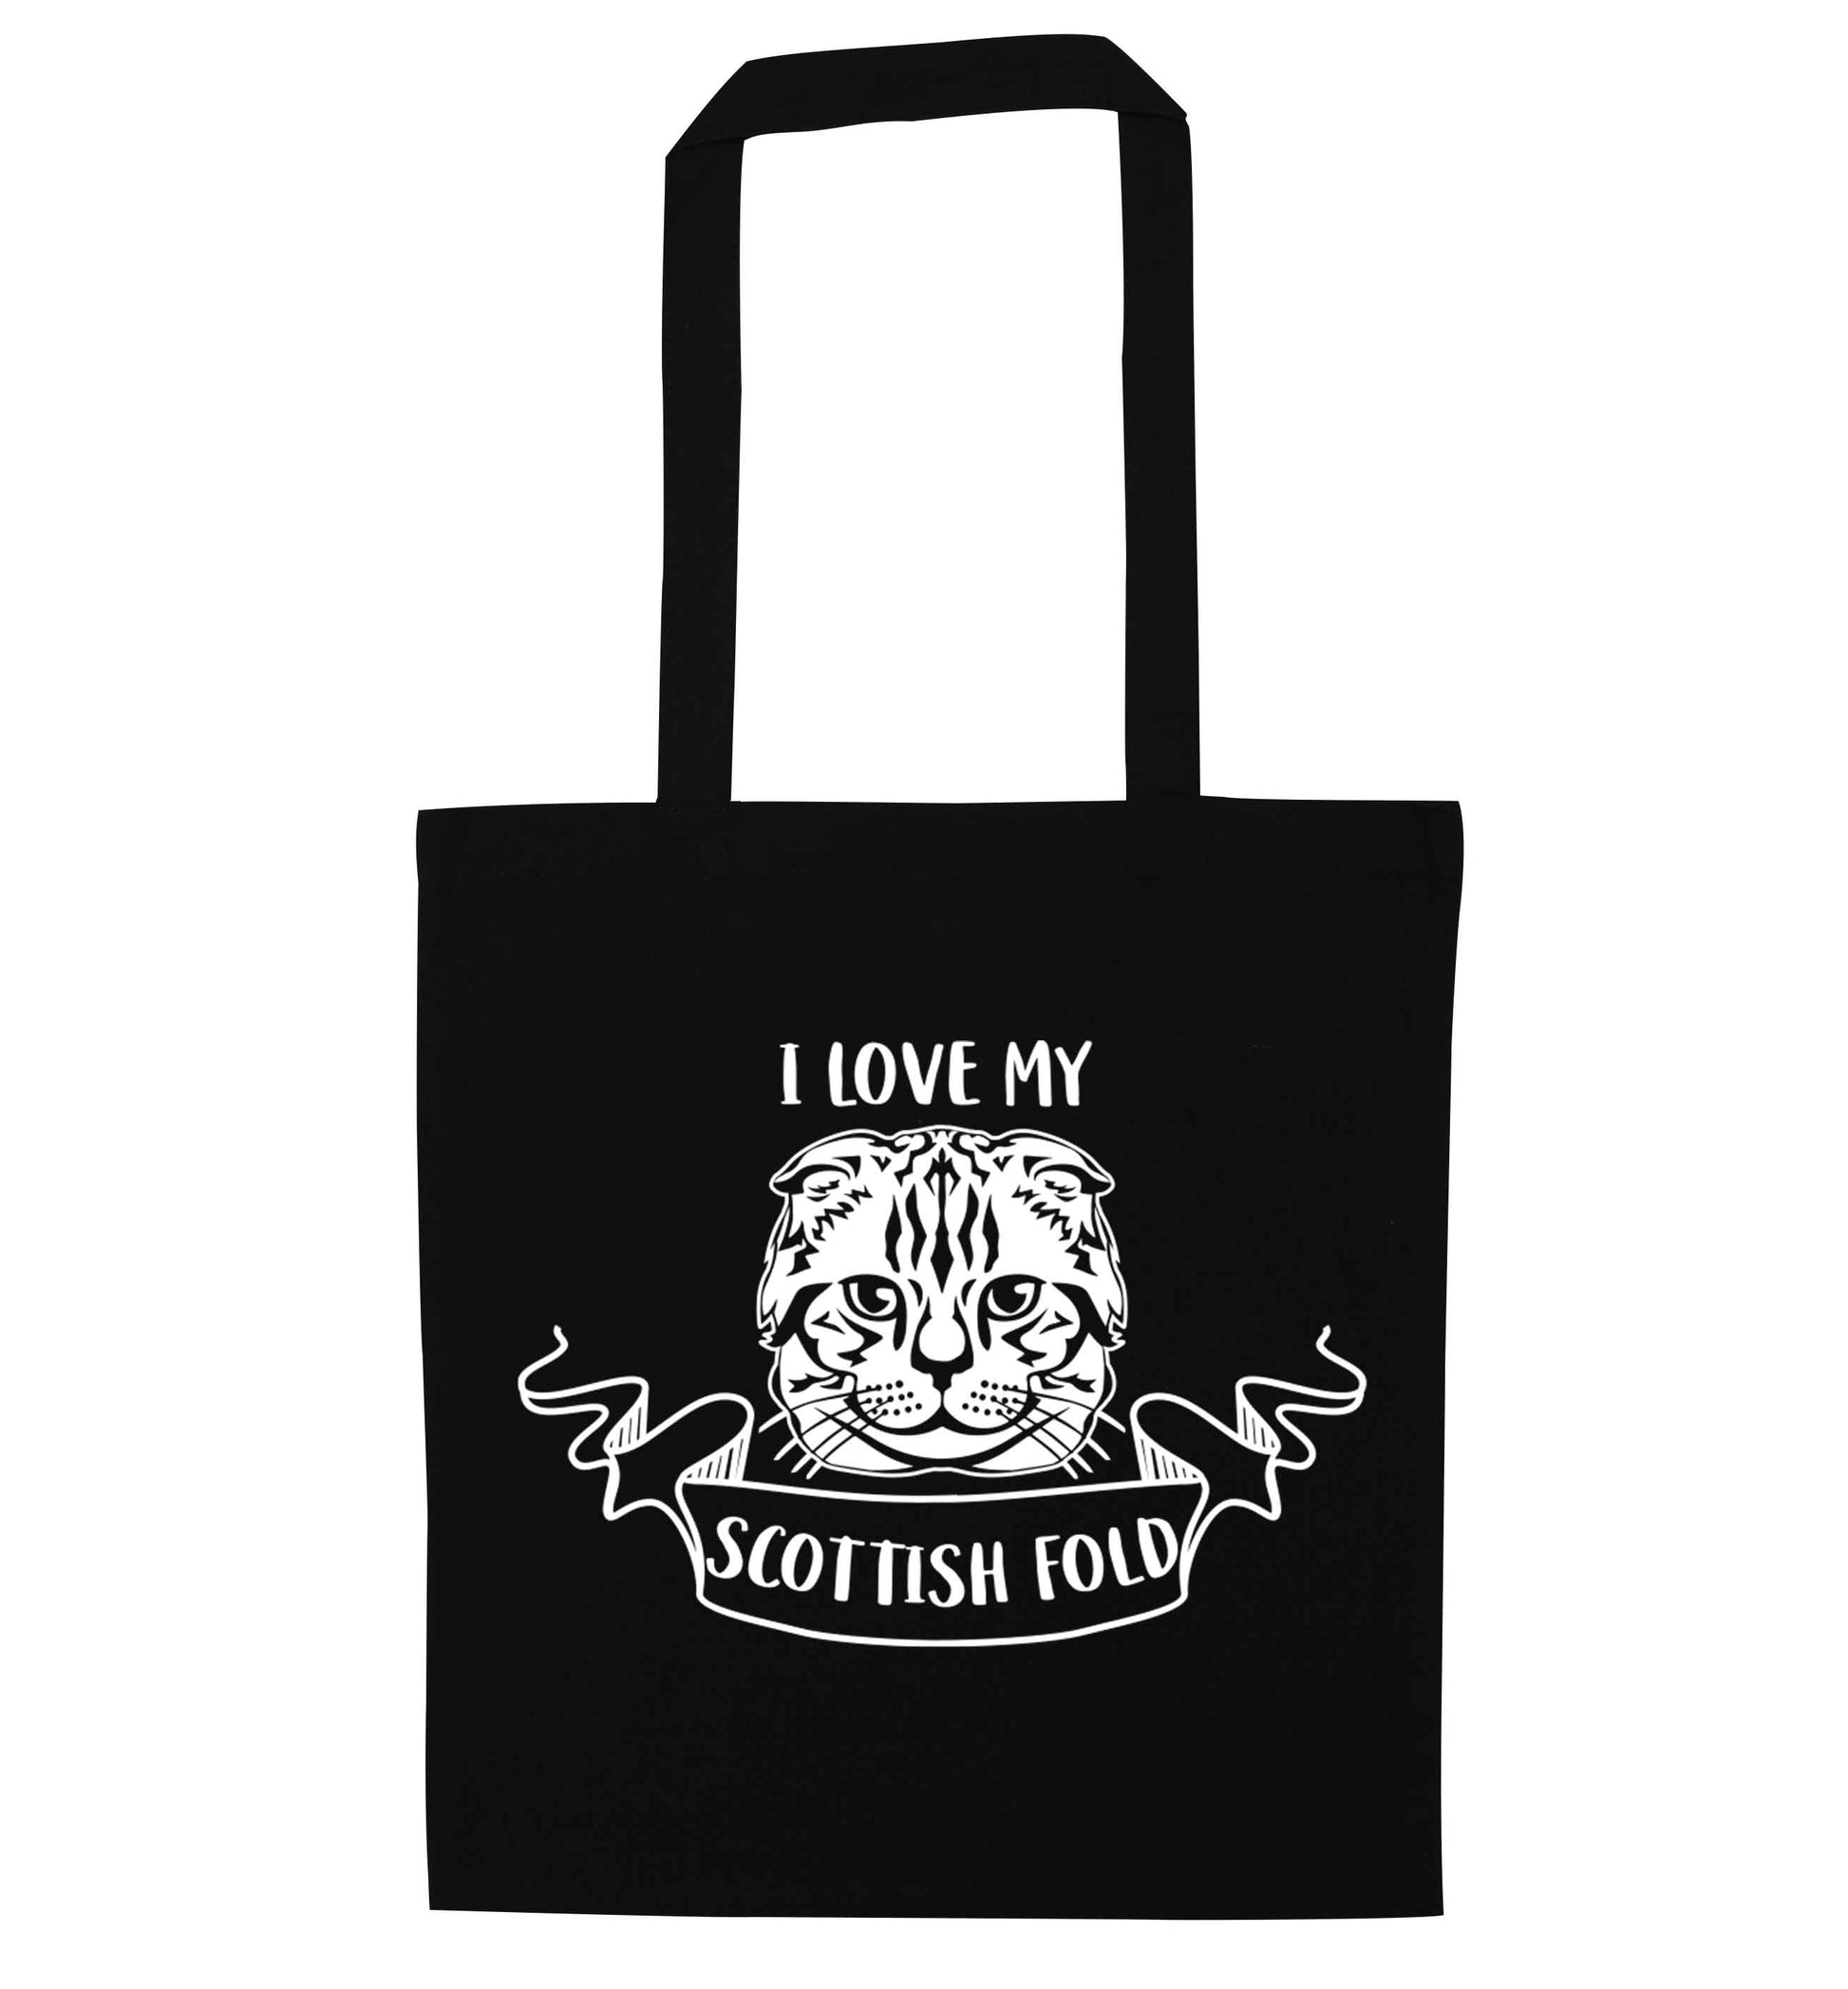 I love my scottish fold cat black tote bag